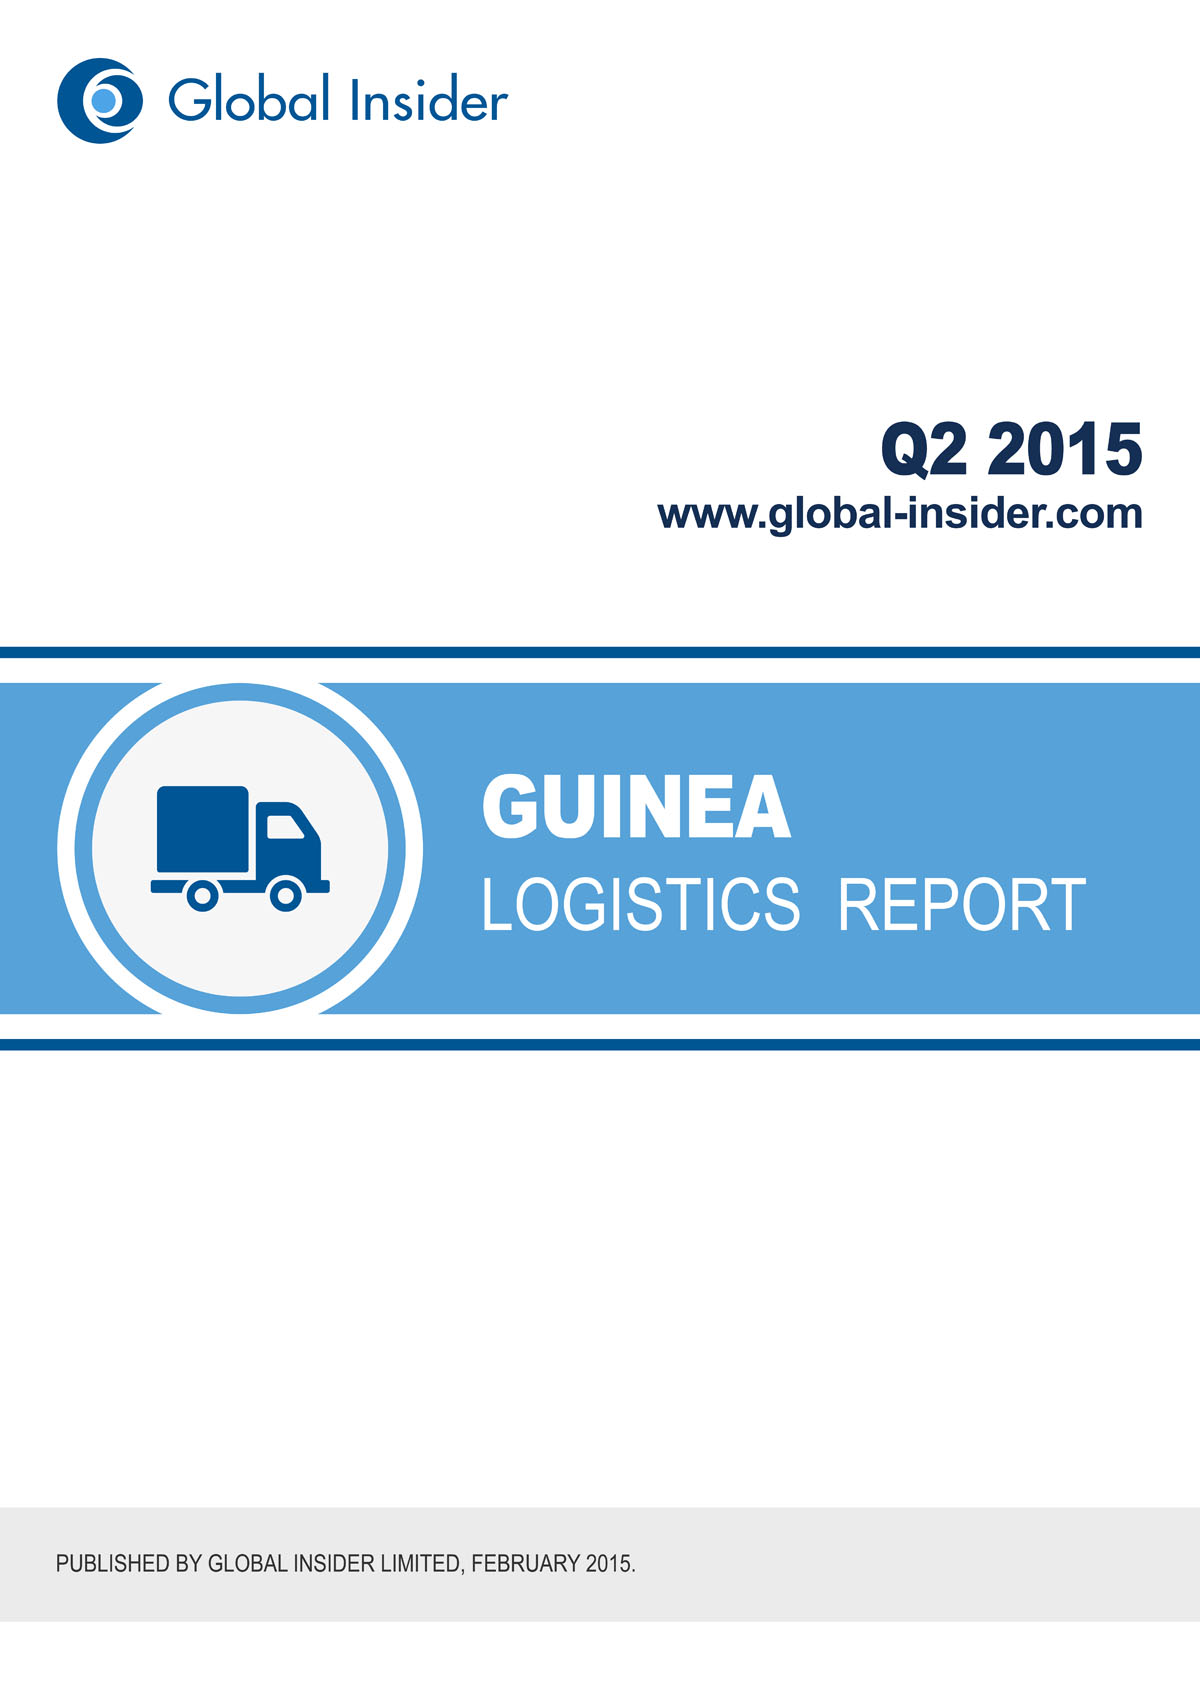 Guinea Logistics Report